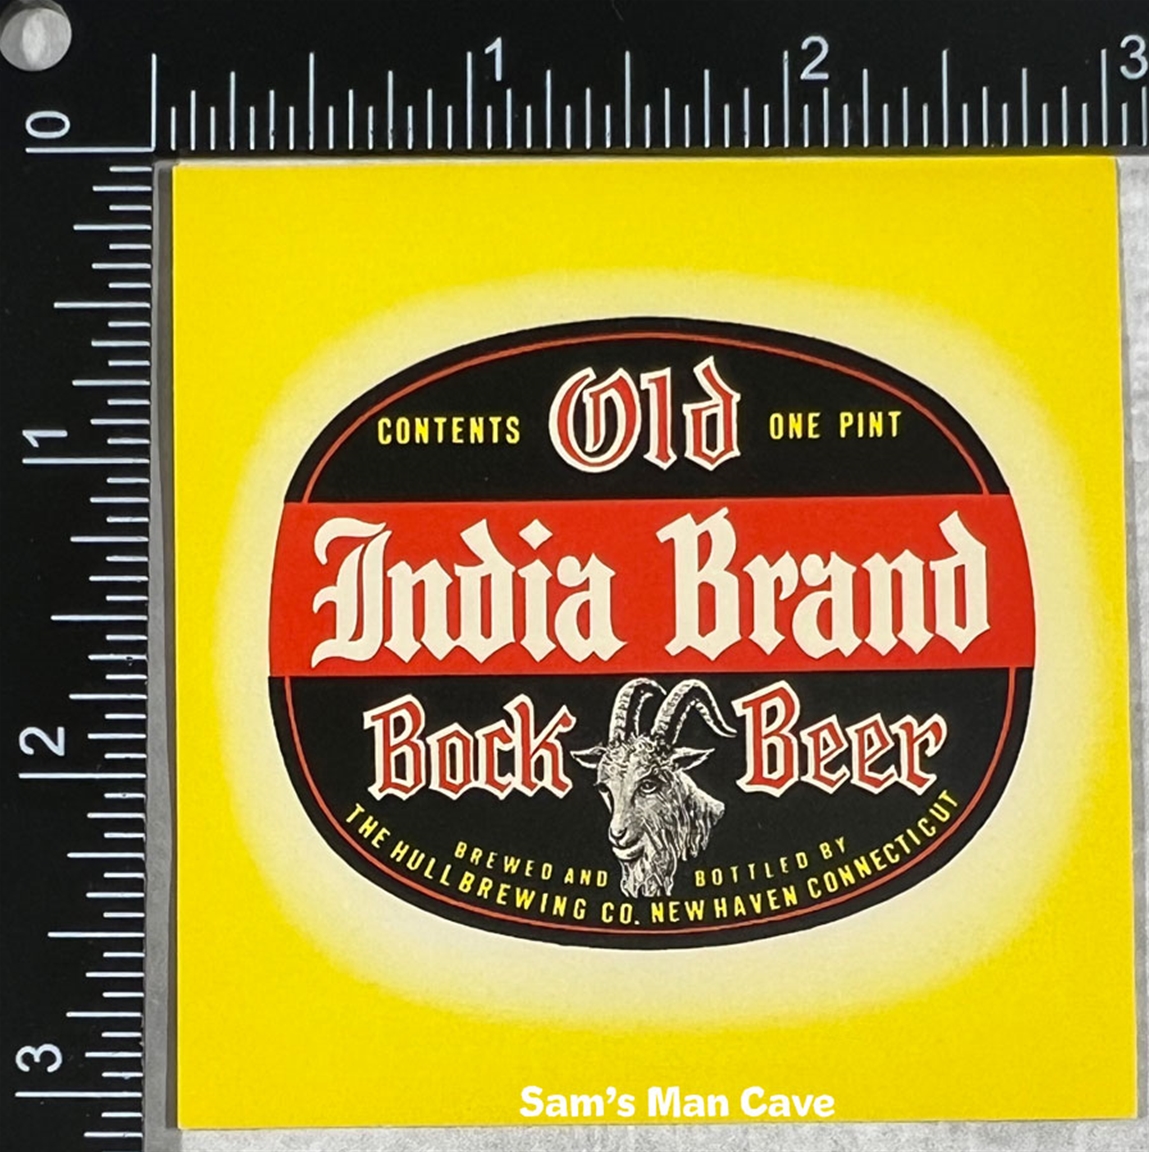 Old India Brand Bock Beer Label